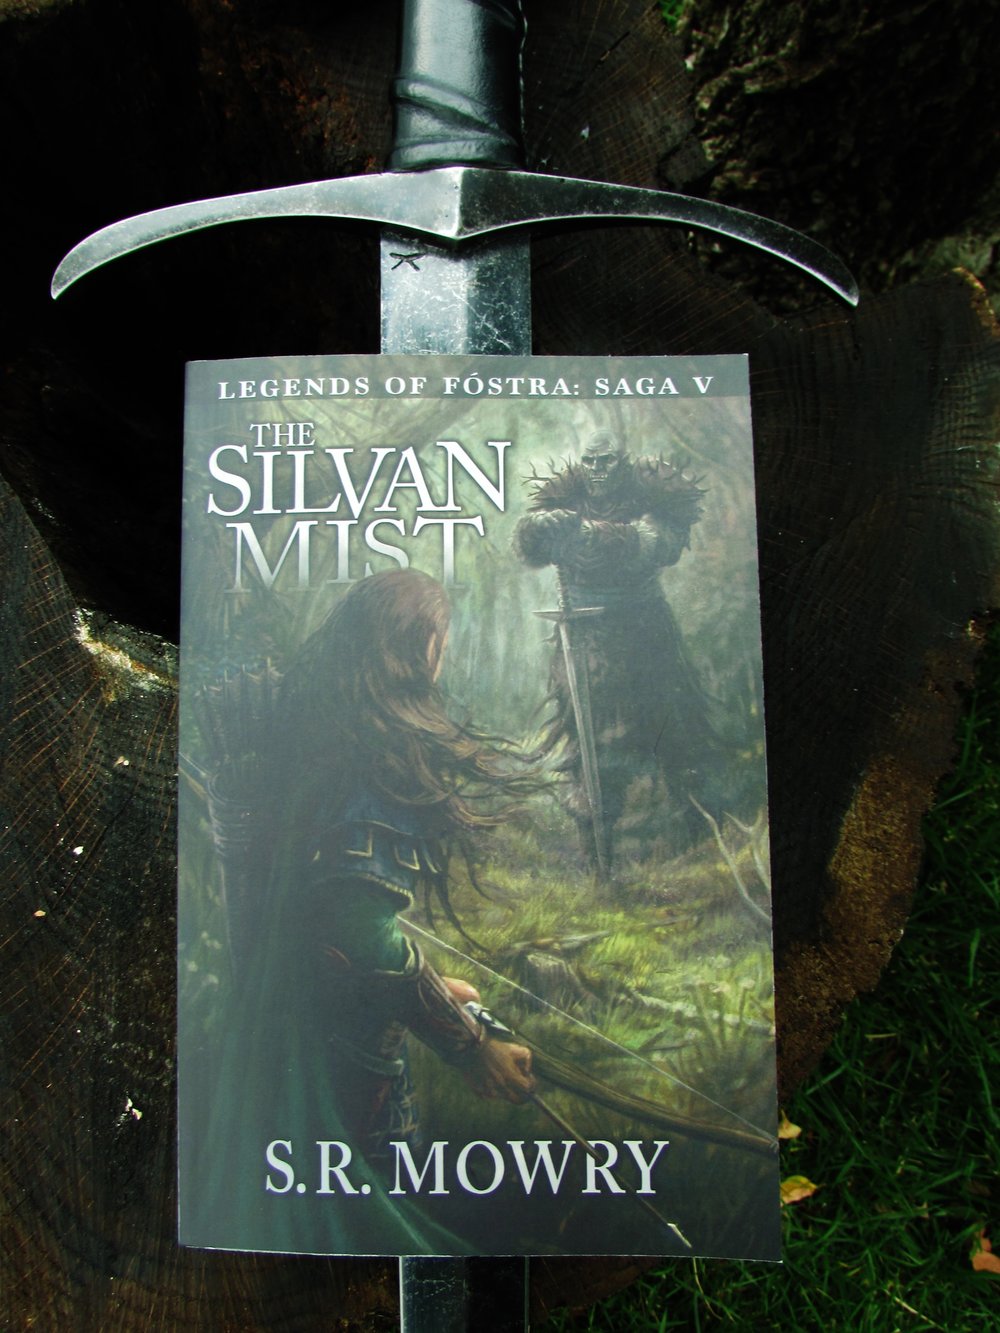 The Silvan Mist